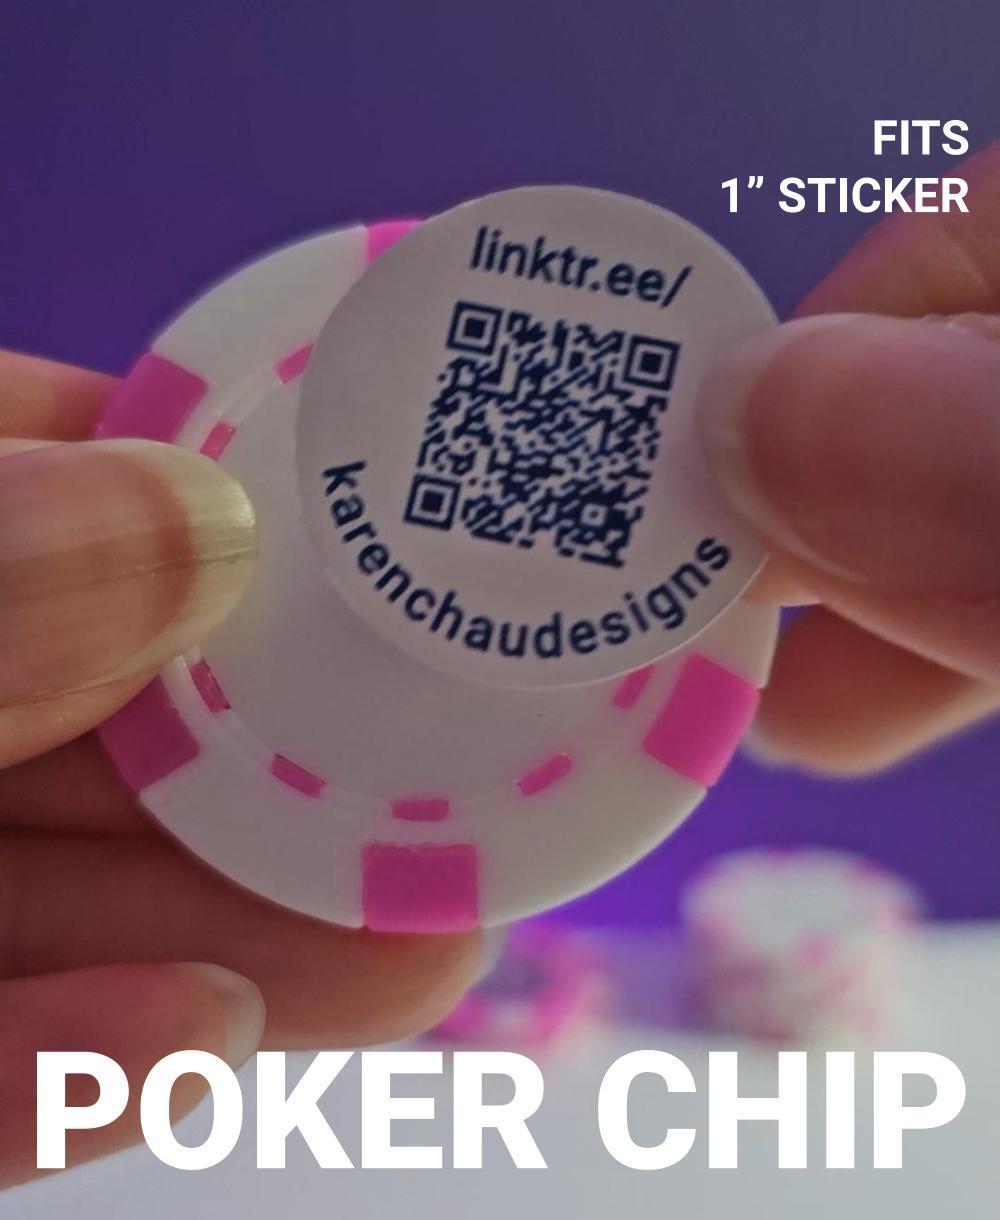 Blank poker chip / MakerChip | Fits 1" sticker label -- good for QR codes, logos, photos, etc 3d model